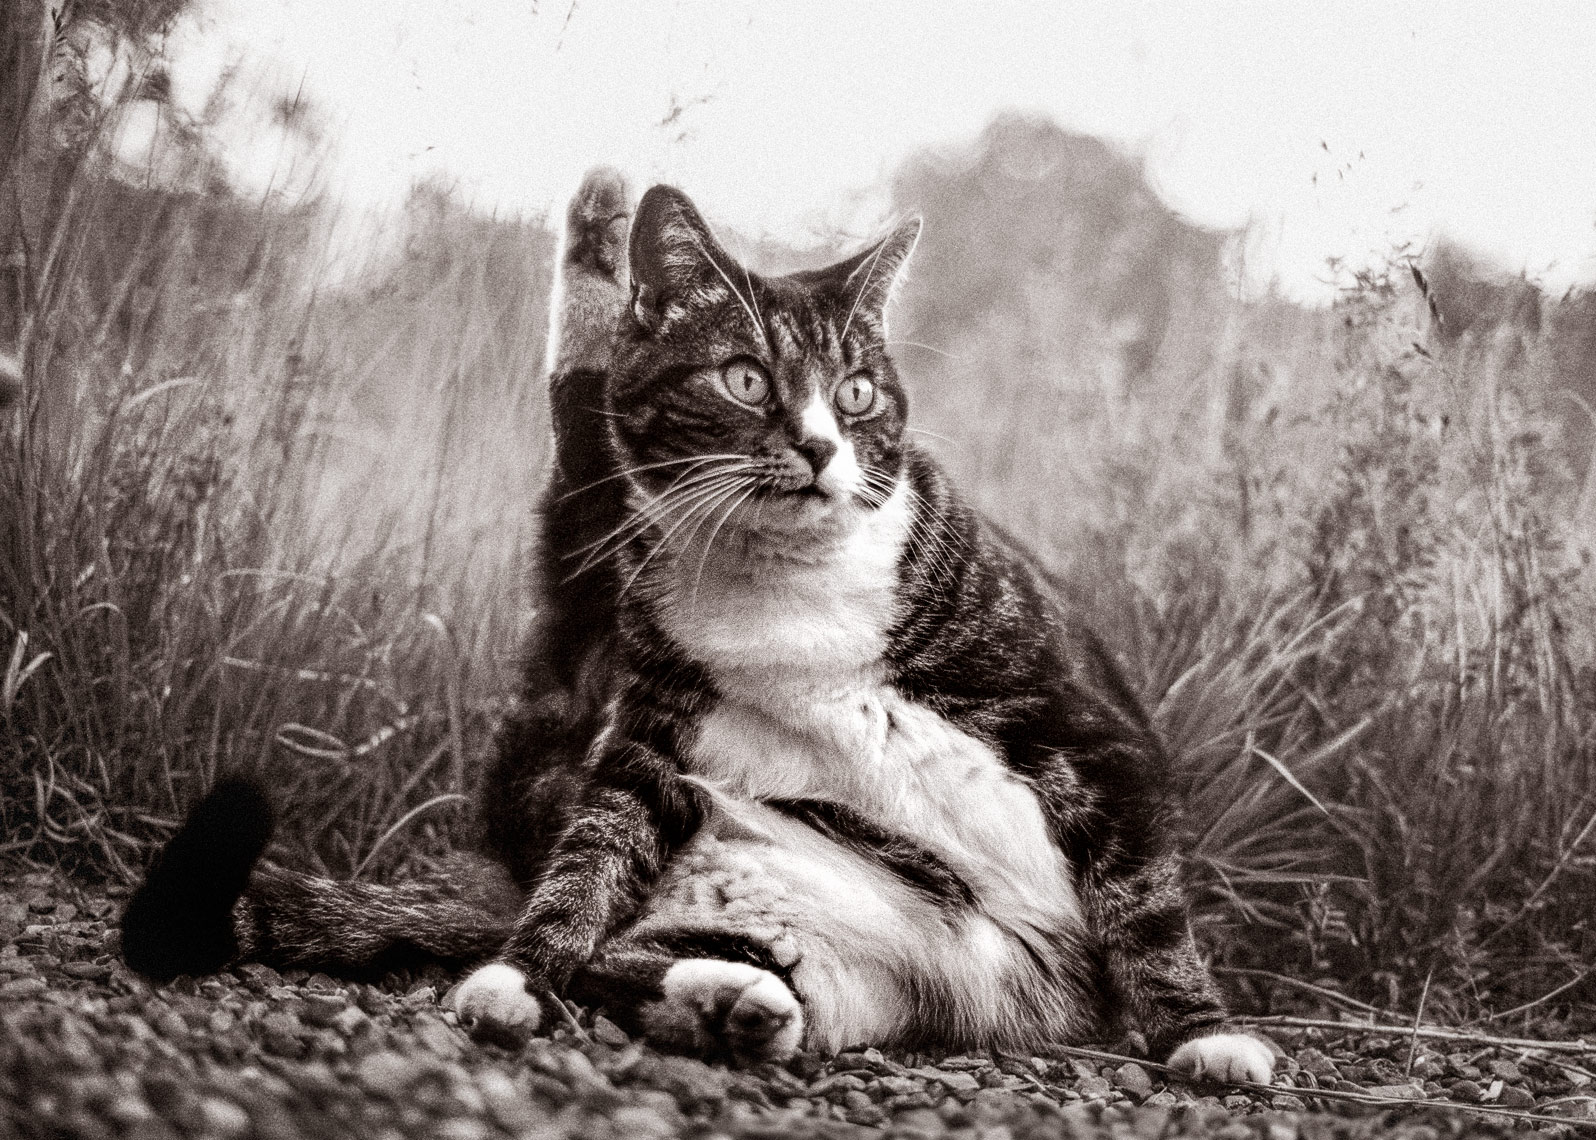 David Lebe; Sitting-20002, cat photograph